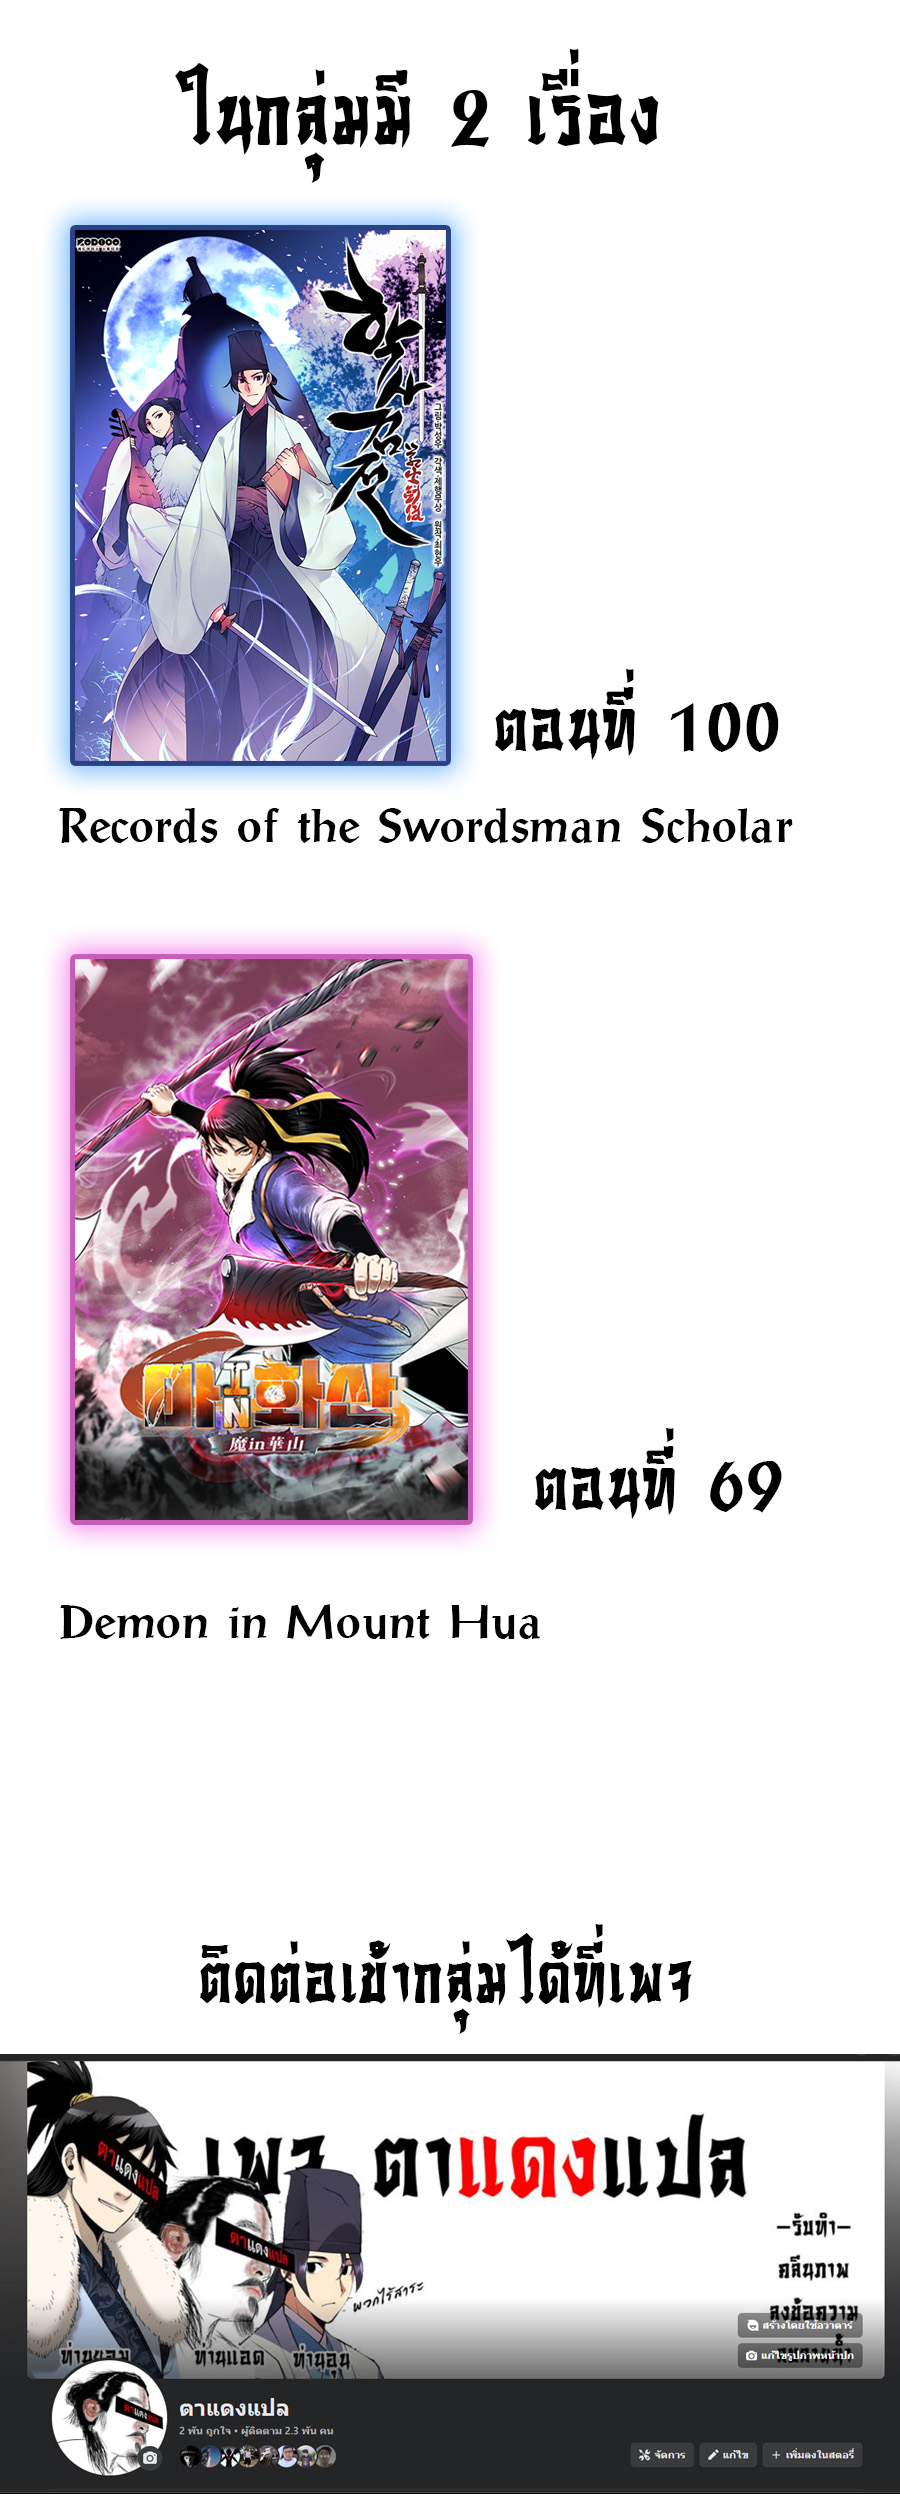 Records of the Swordsman Scholar 80 (14)